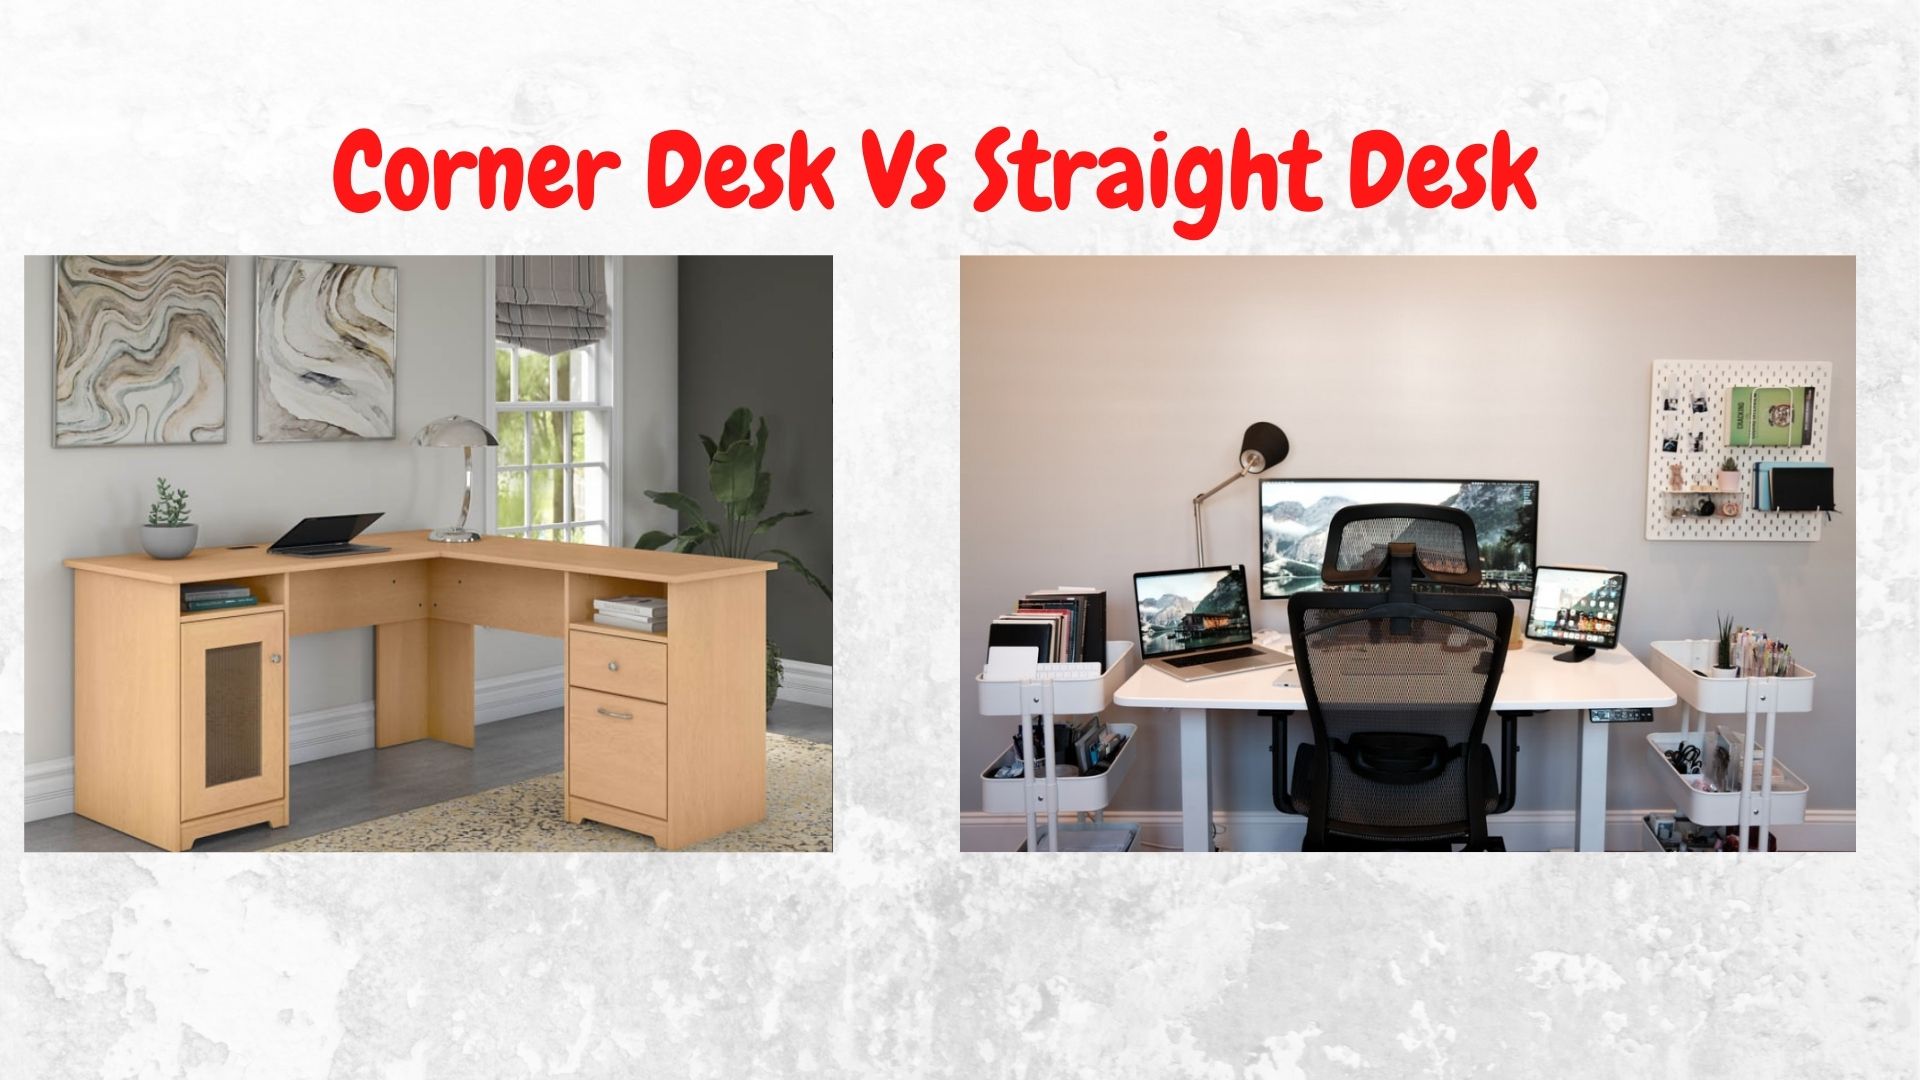 The Great Debate: Straight vs Corner Desks